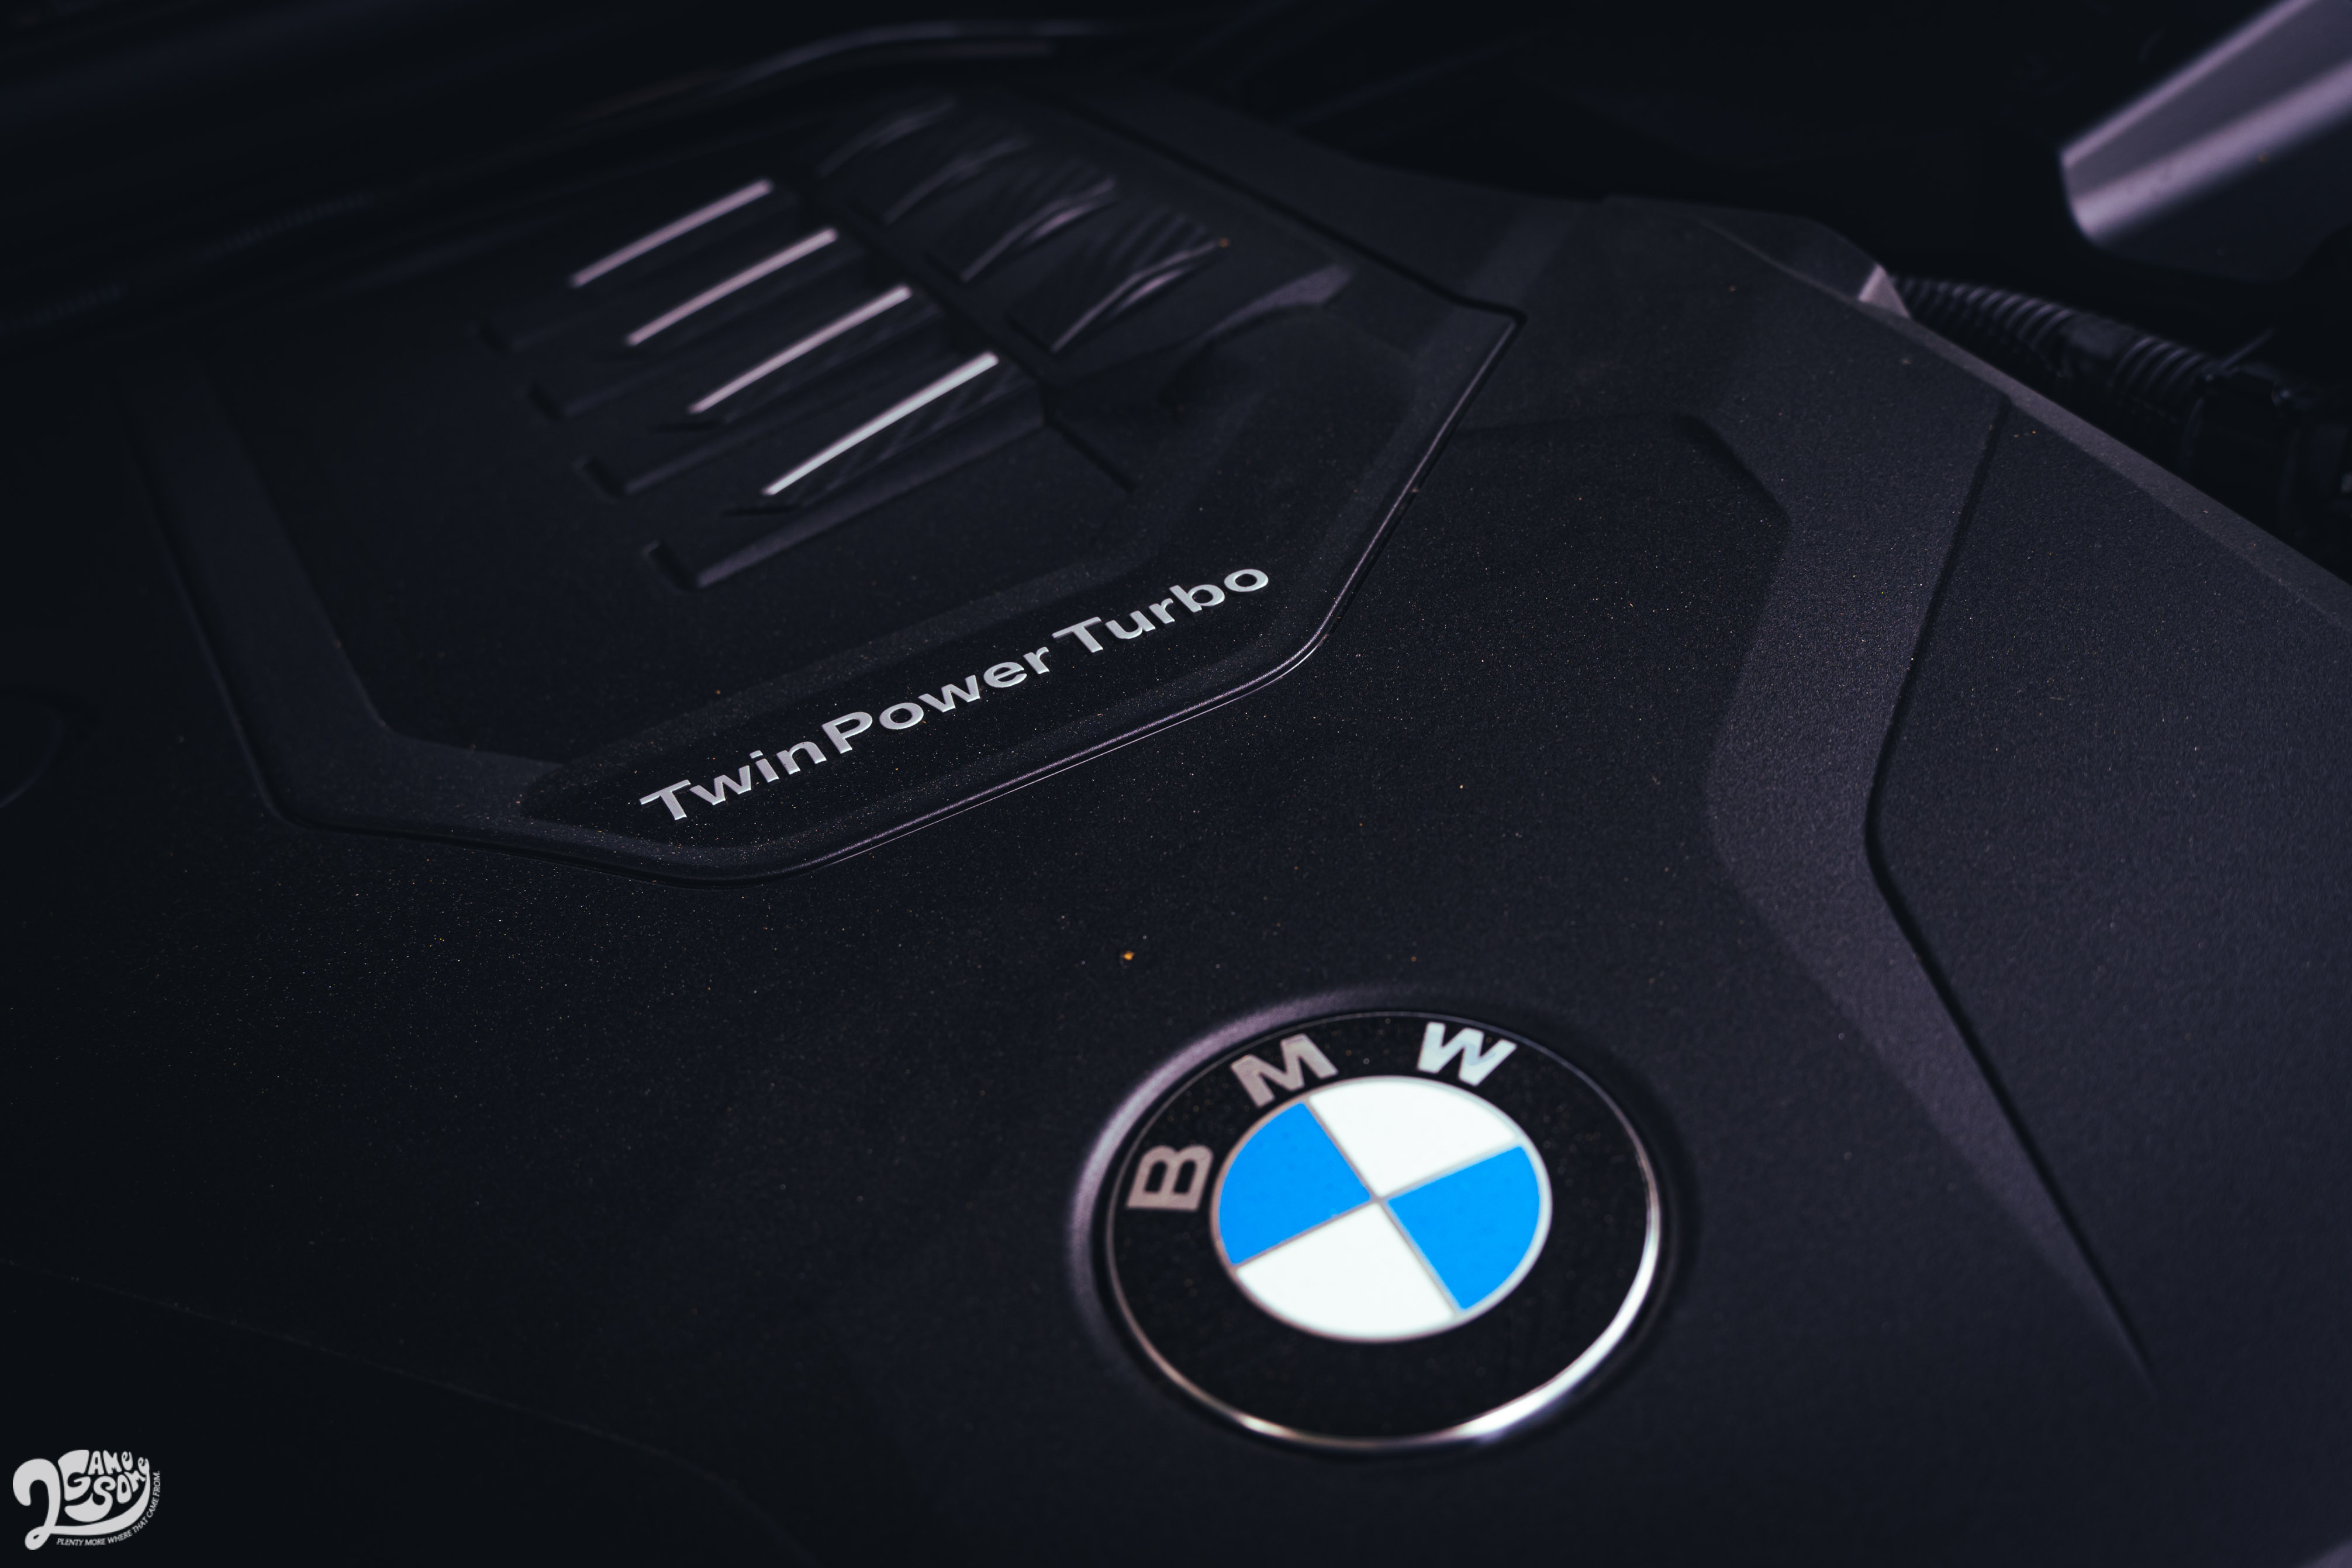 TwinPower Turbo 渦輪四缸引擎擁有 258 匹最大馬力、400 牛頓米最大扭力、6 秒內破百的實力。